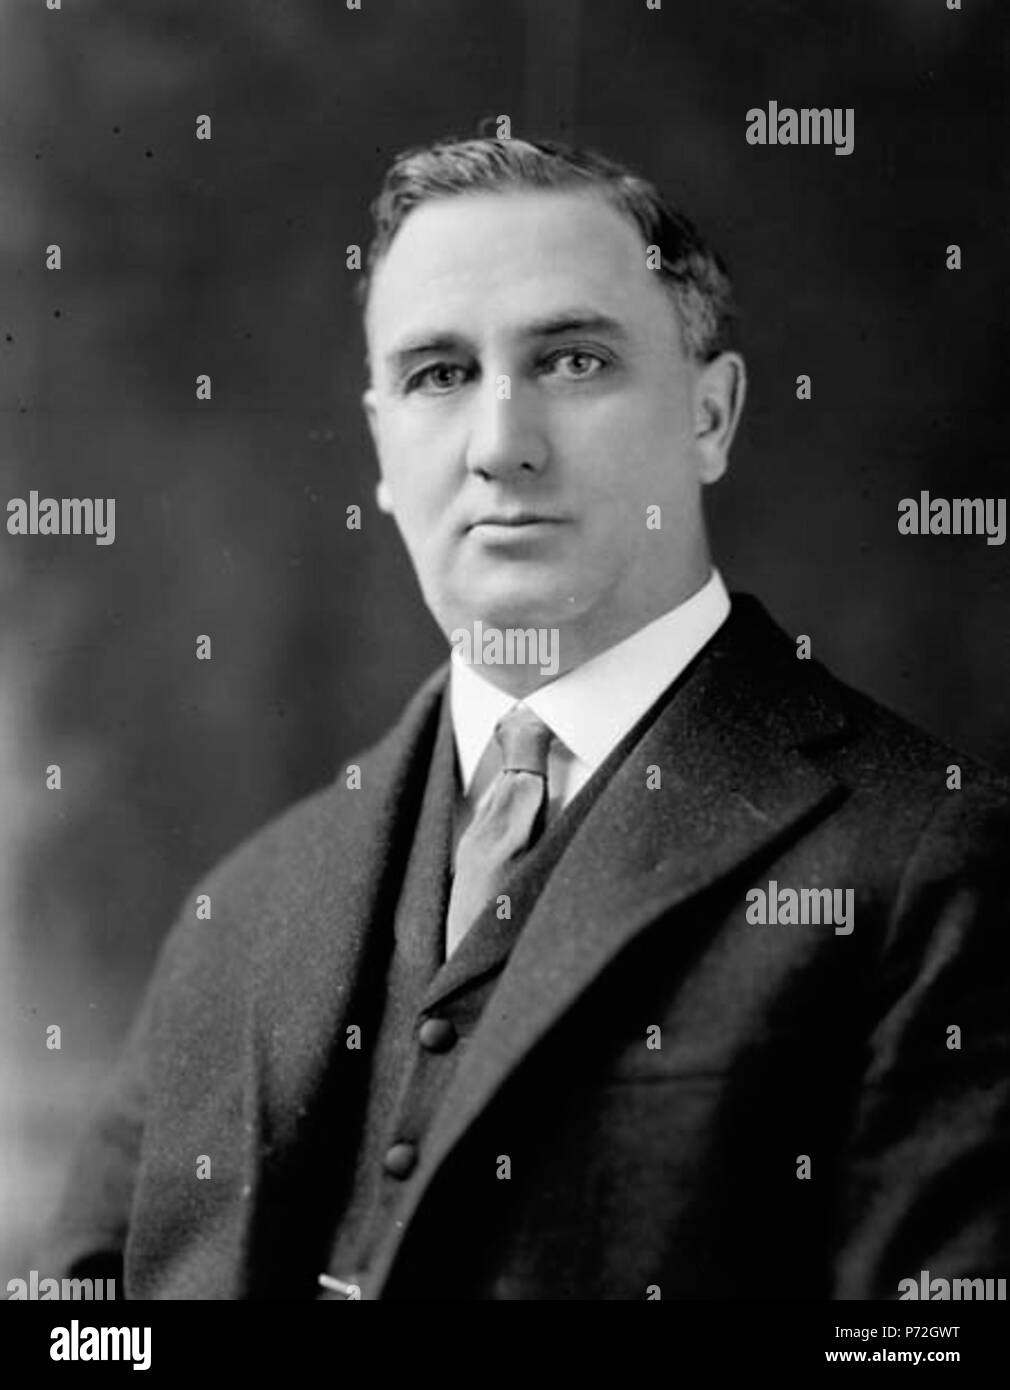 Robertson, Gideon Decker l'honorable (Sénateur) 26 août 1874 - 5 août, 1933. 13 mai 1922 Gideon Robertson Banque D'Images